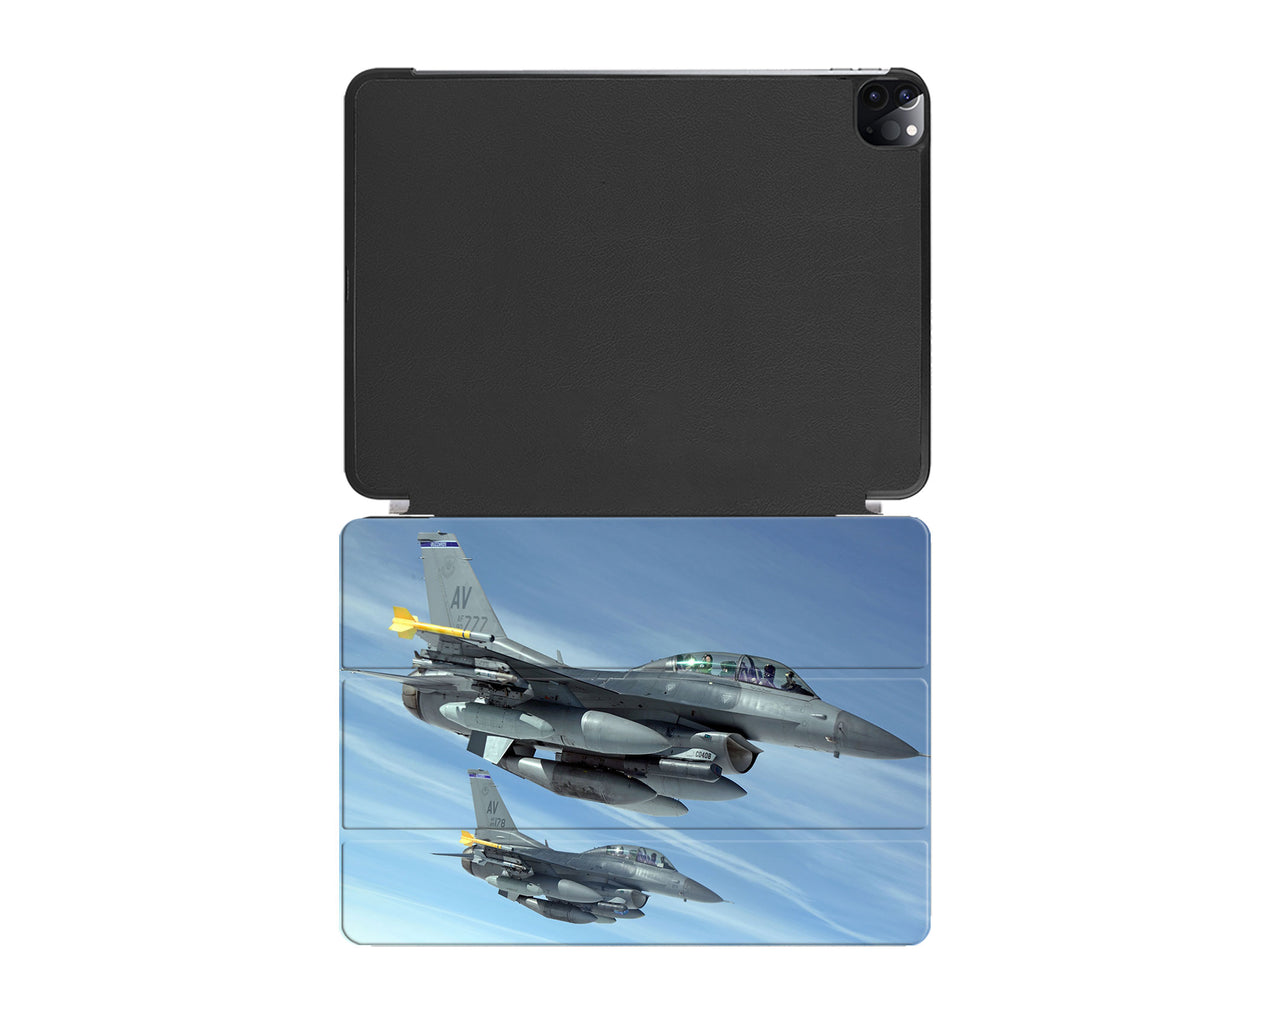 Two Fighting Falcon Designed iPad Cases